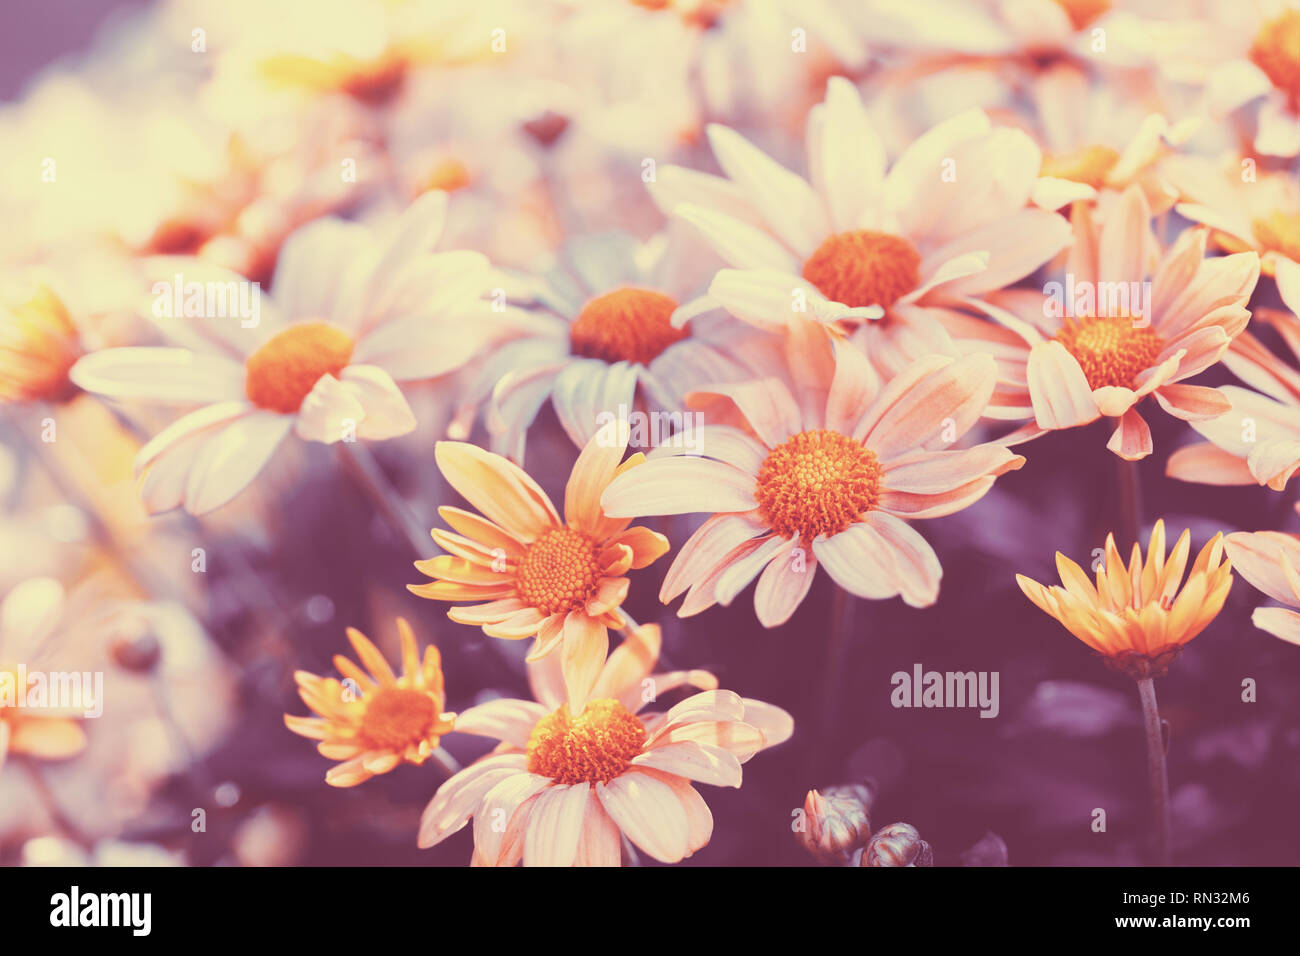 Vintage daisy flower background at sunset light Stock Photo